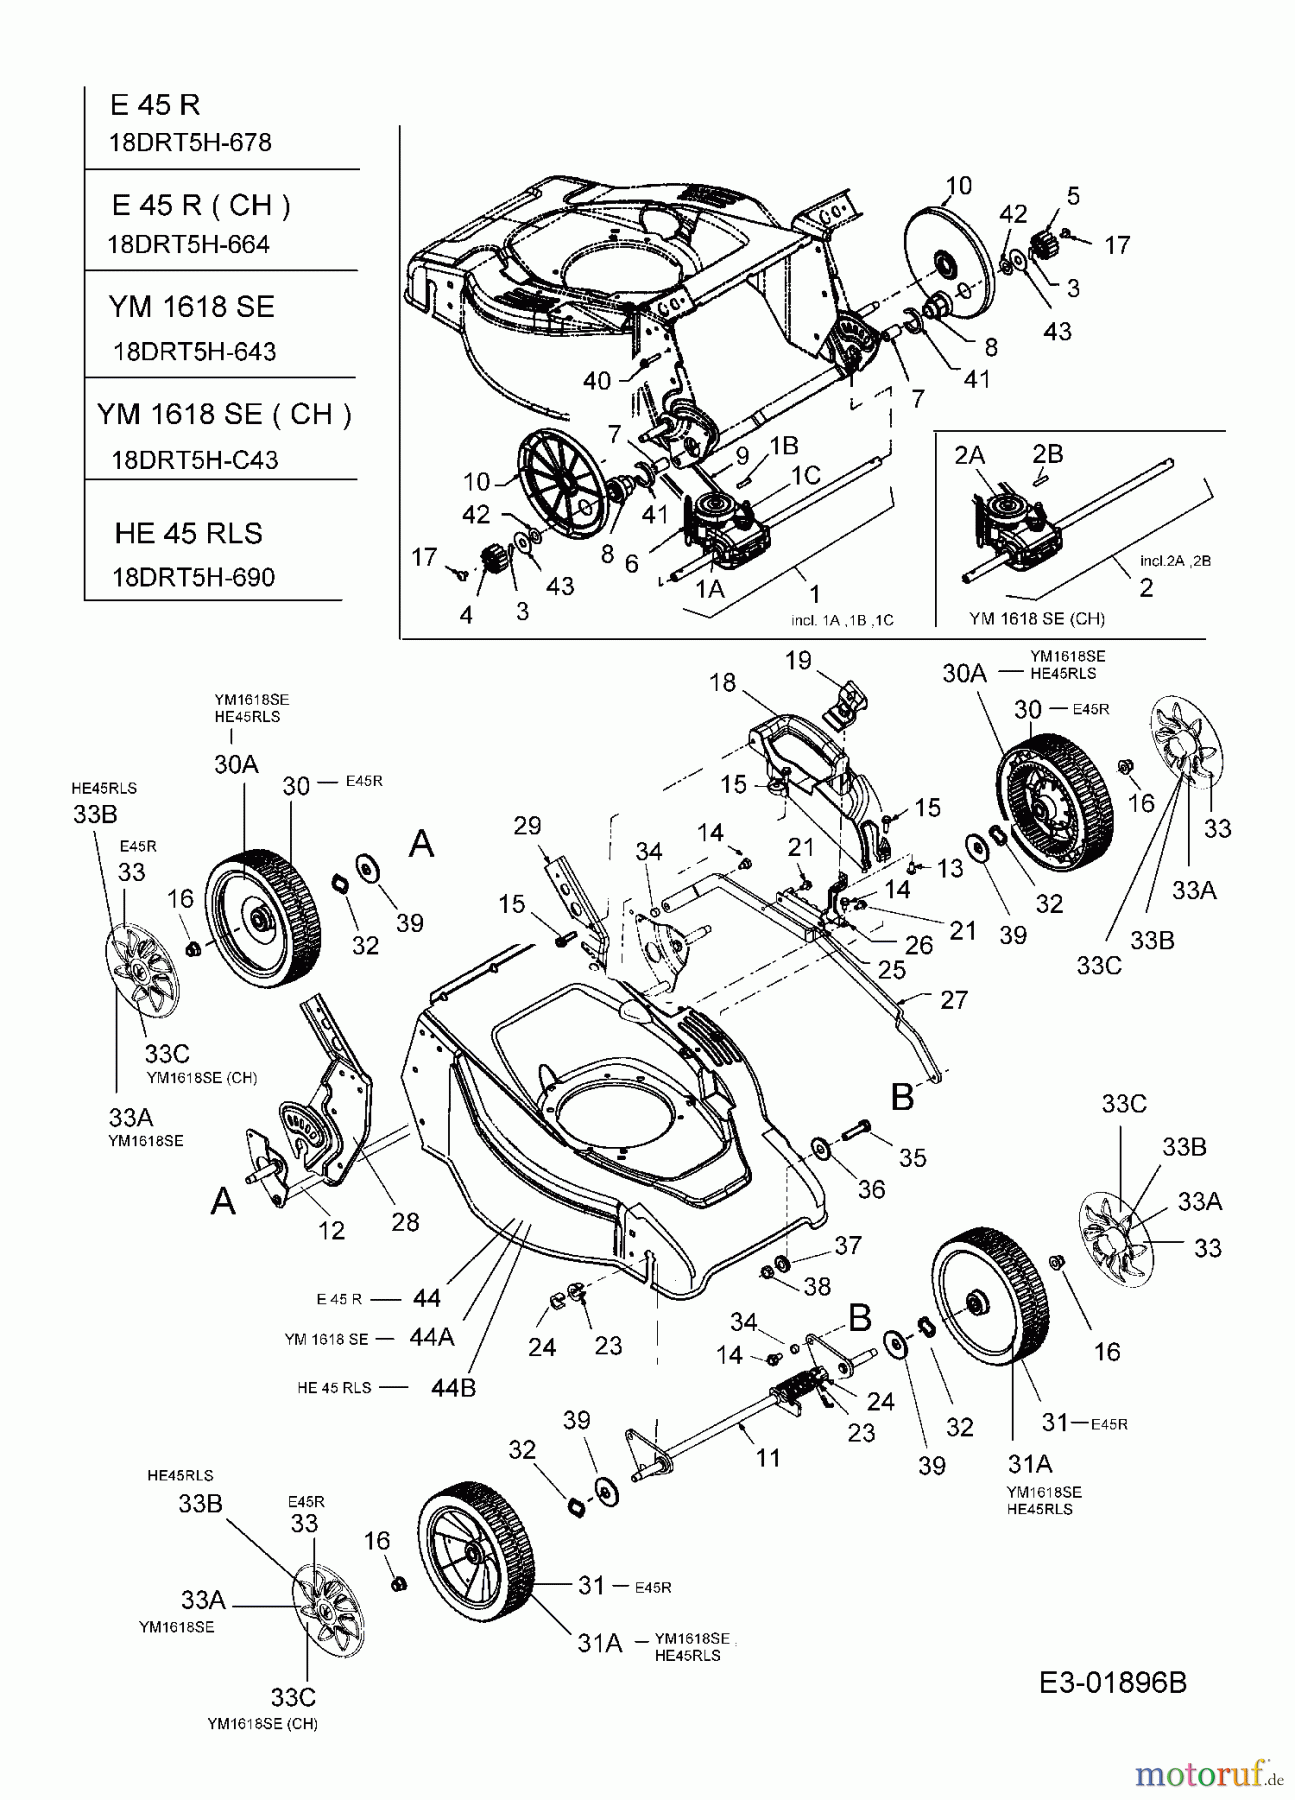  MTD Electric mower self propelled E 45 R 18DRT5H-678  (2005) Gearbox, Wheels, Cutting hight adjustment